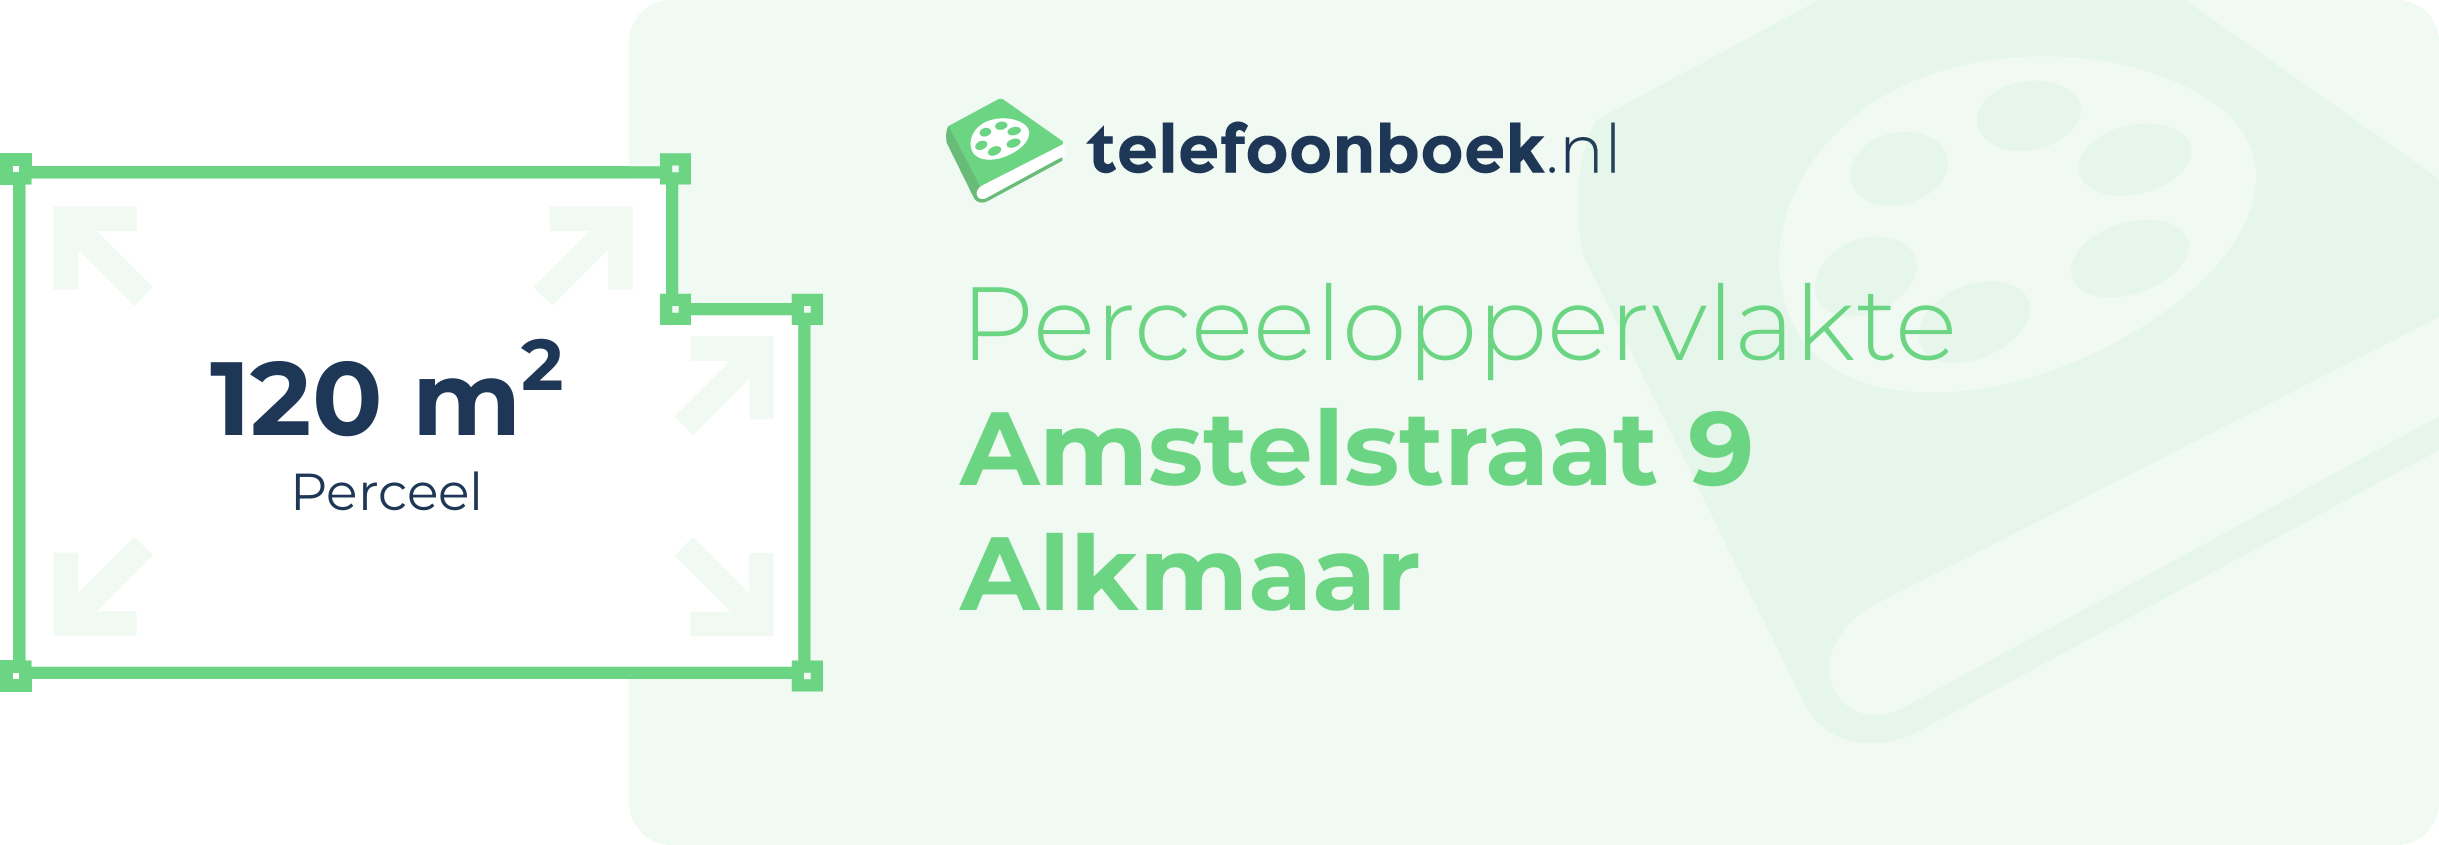 Perceeloppervlakte Amstelstraat 9 Alkmaar